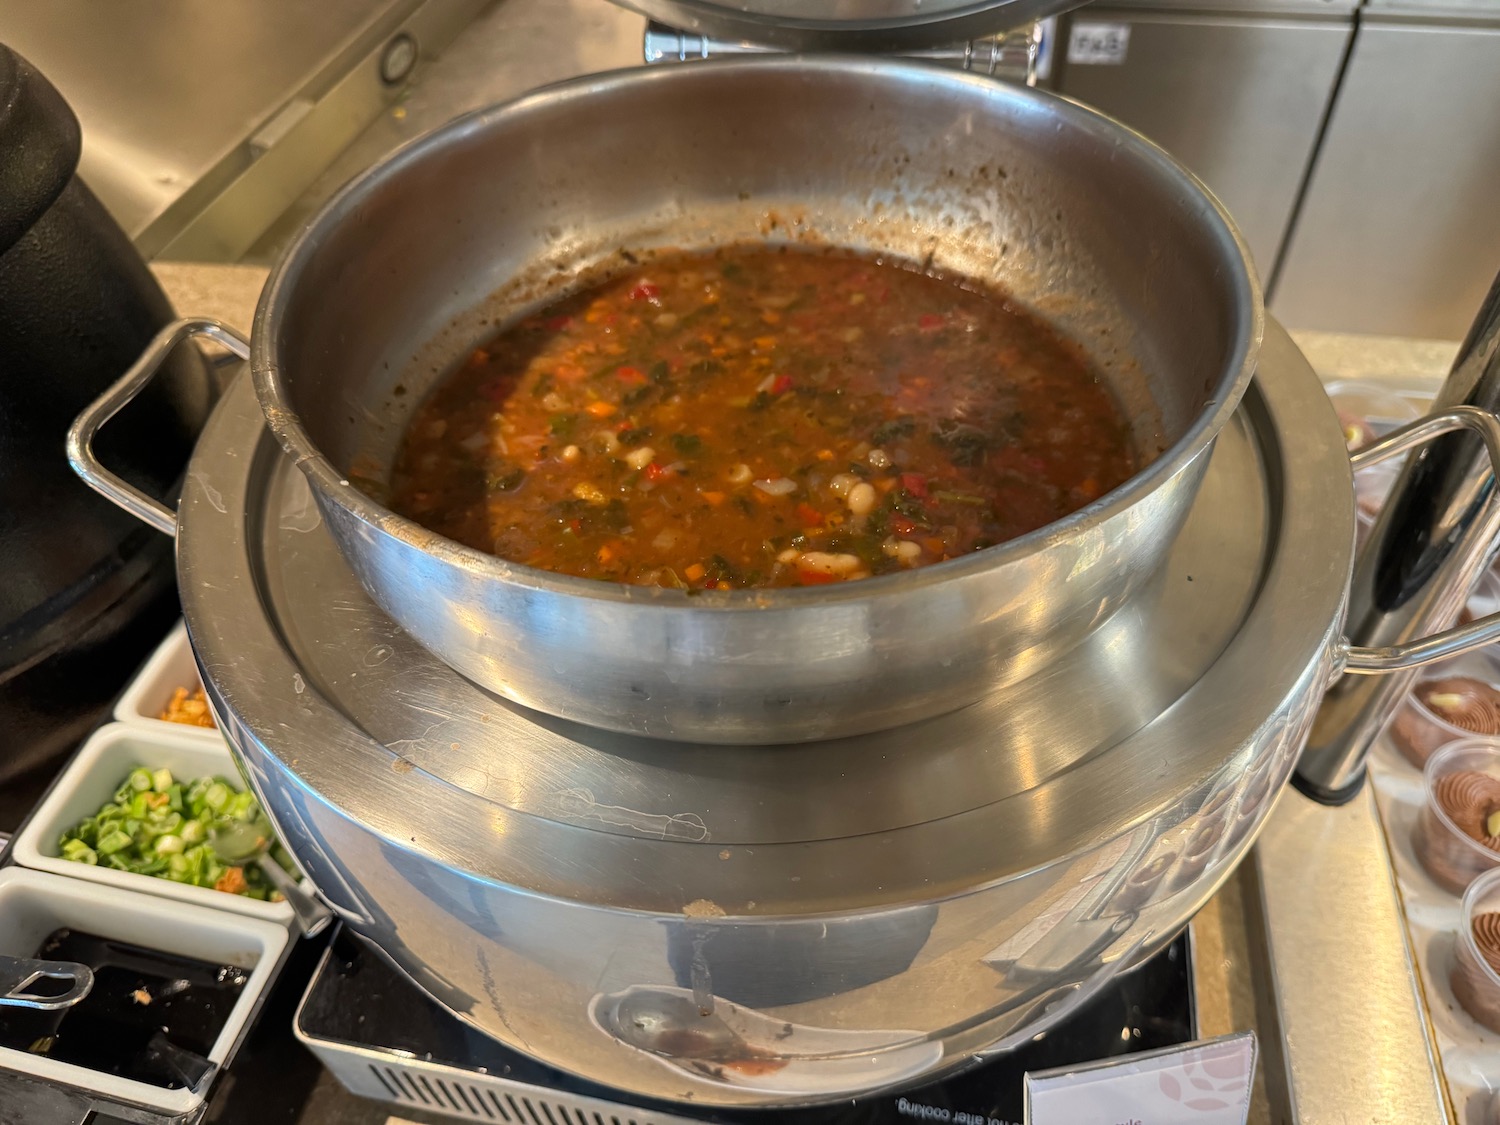 a pot of soup on a stove